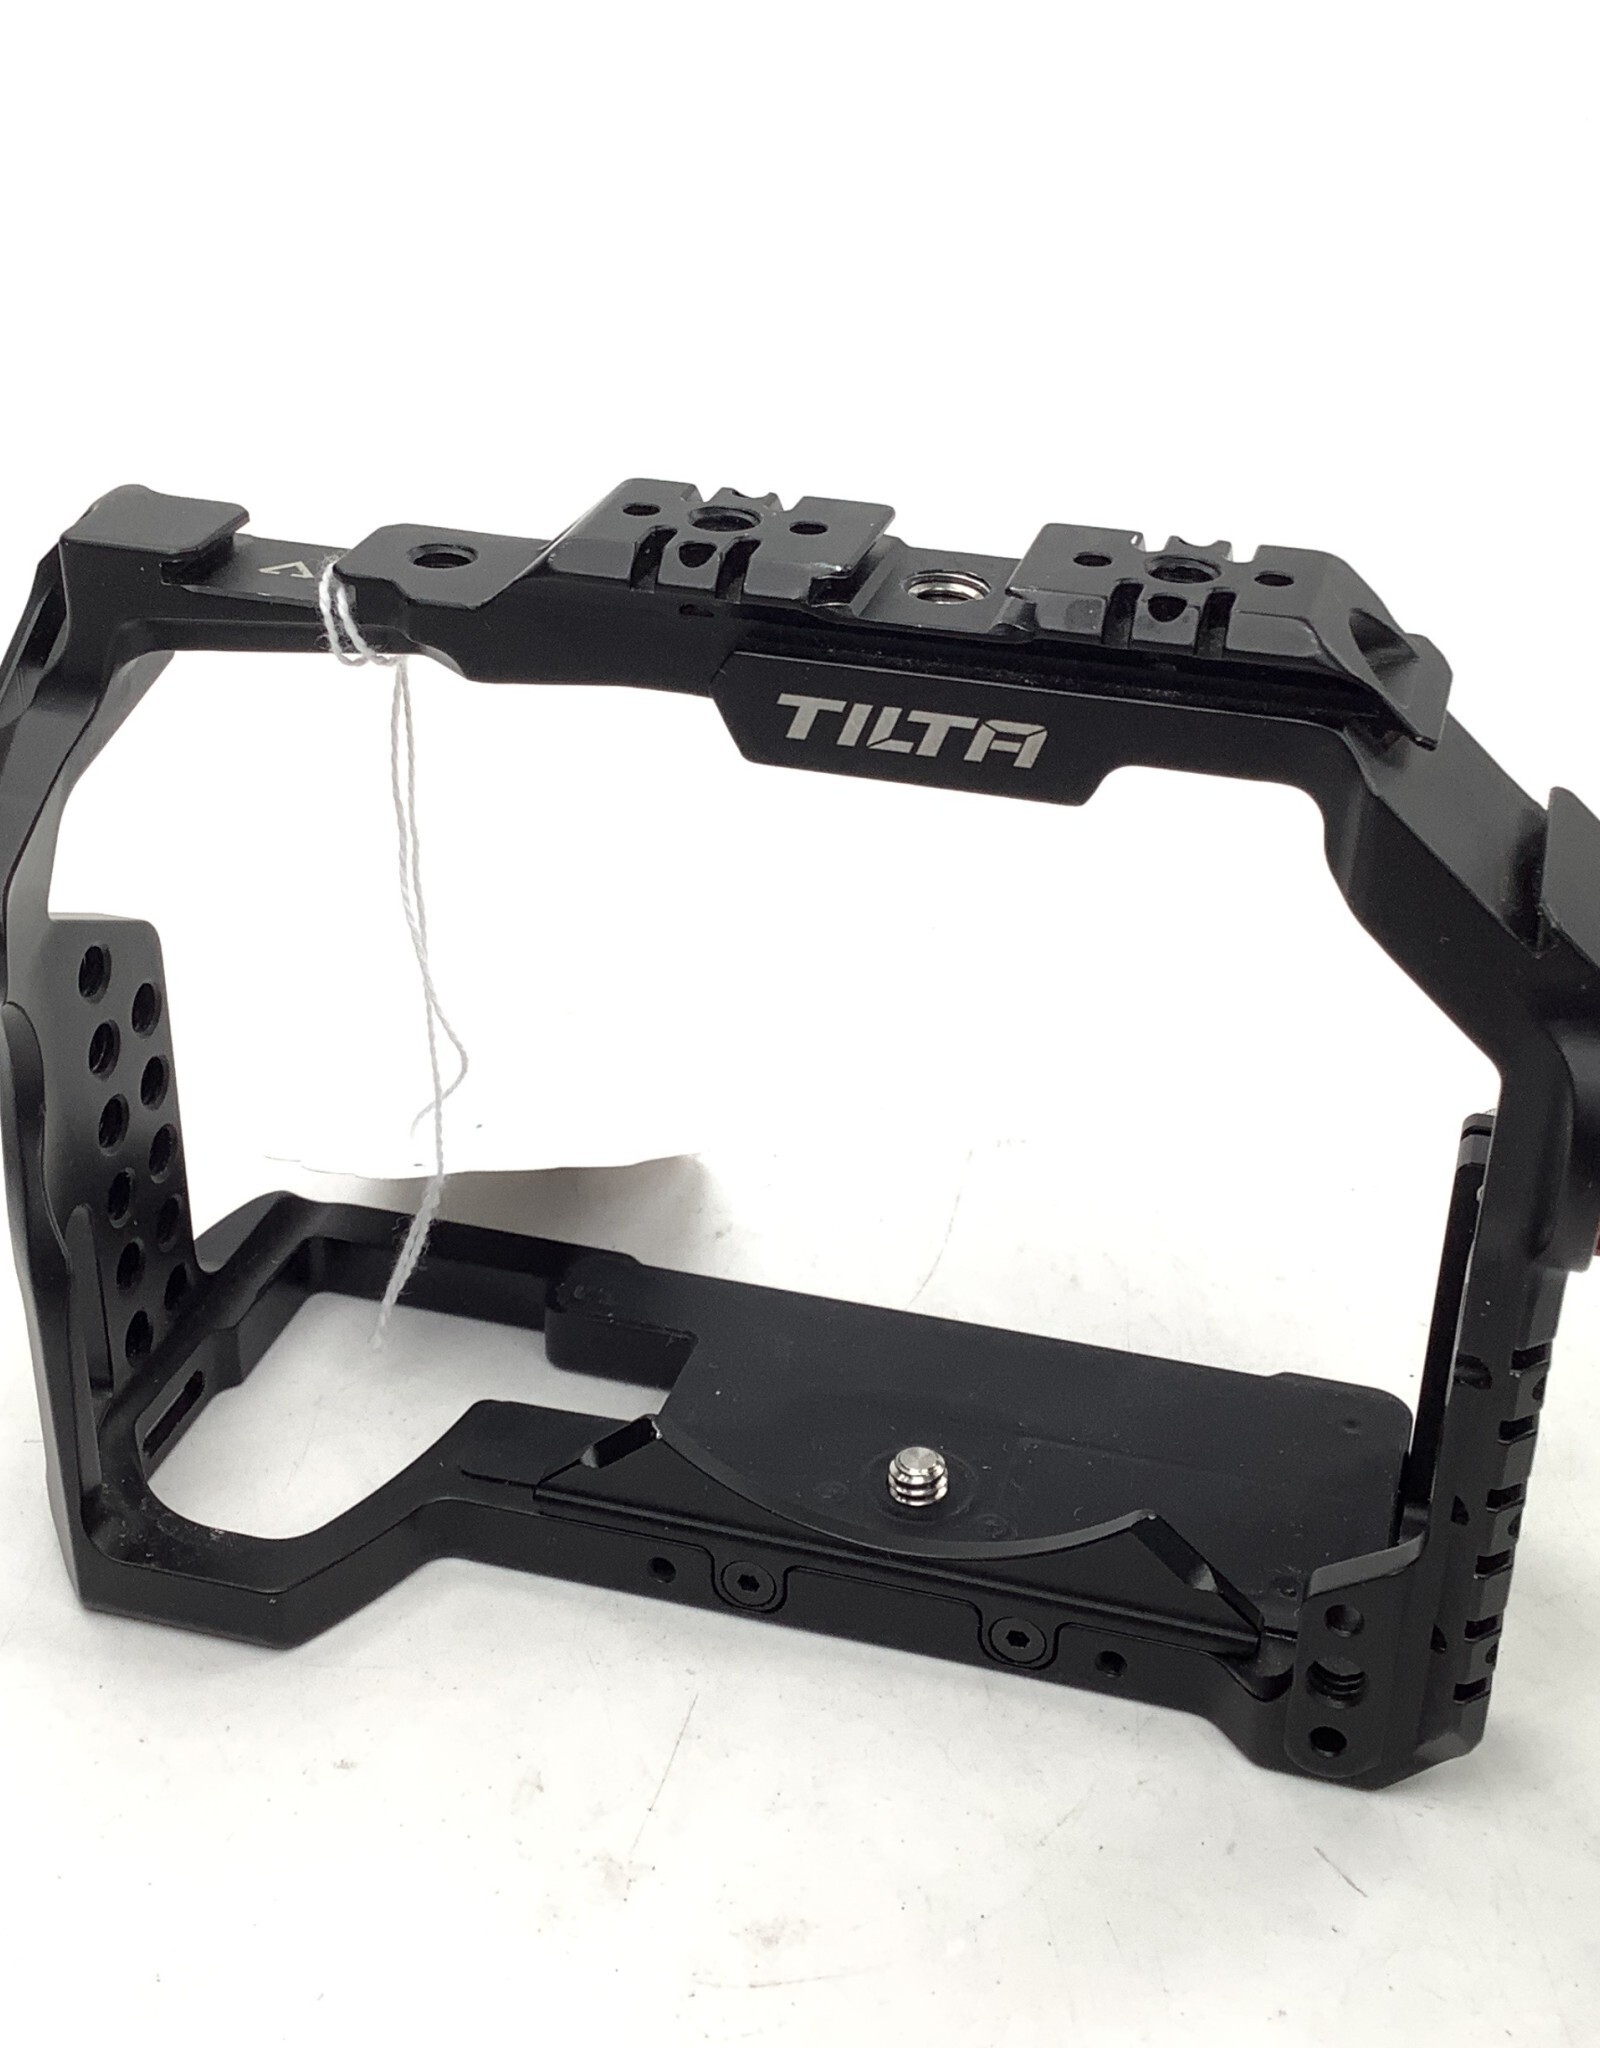 Tilta Tilta Cage for Panasonic Lumix S5 Used Good